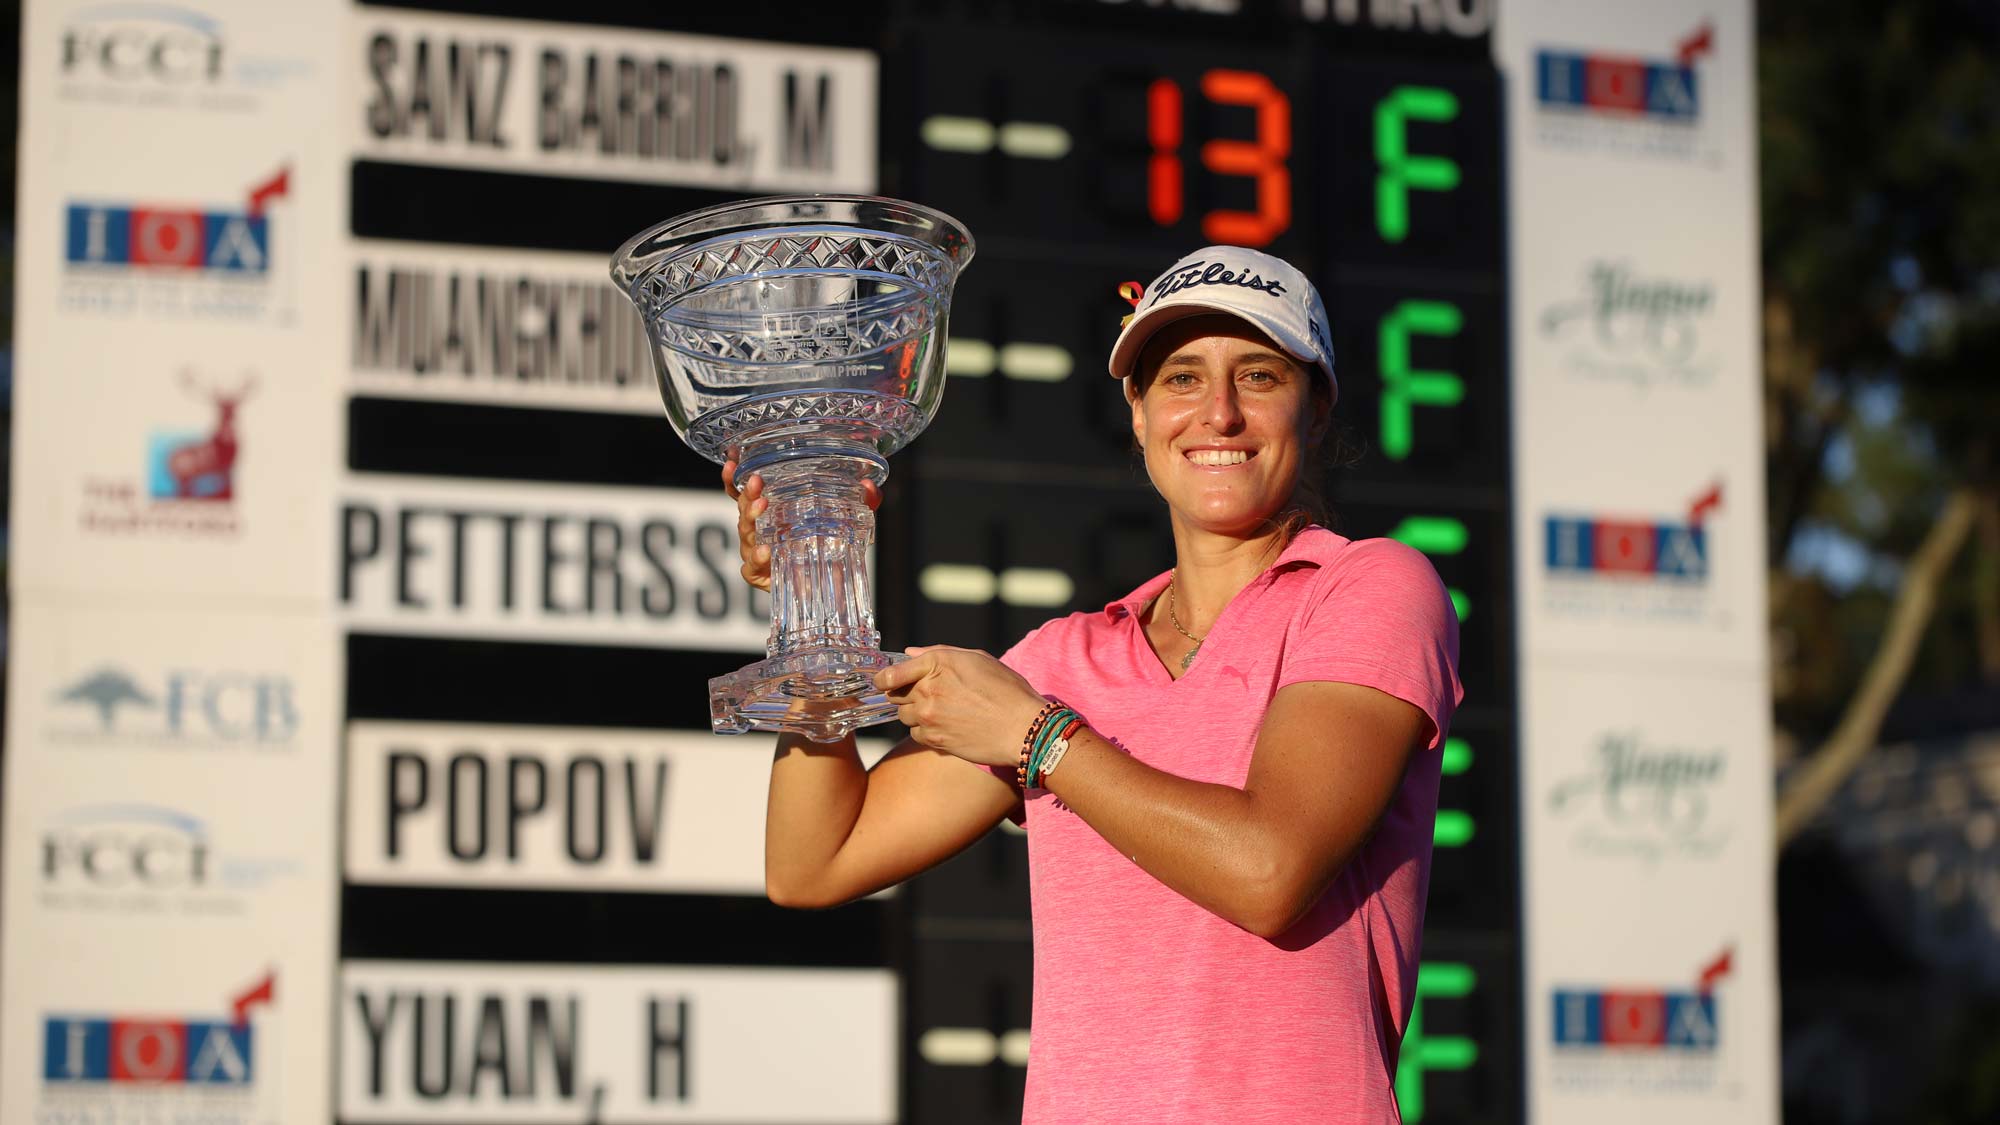 Marta Sanz Barrio with trophy at leaderboard